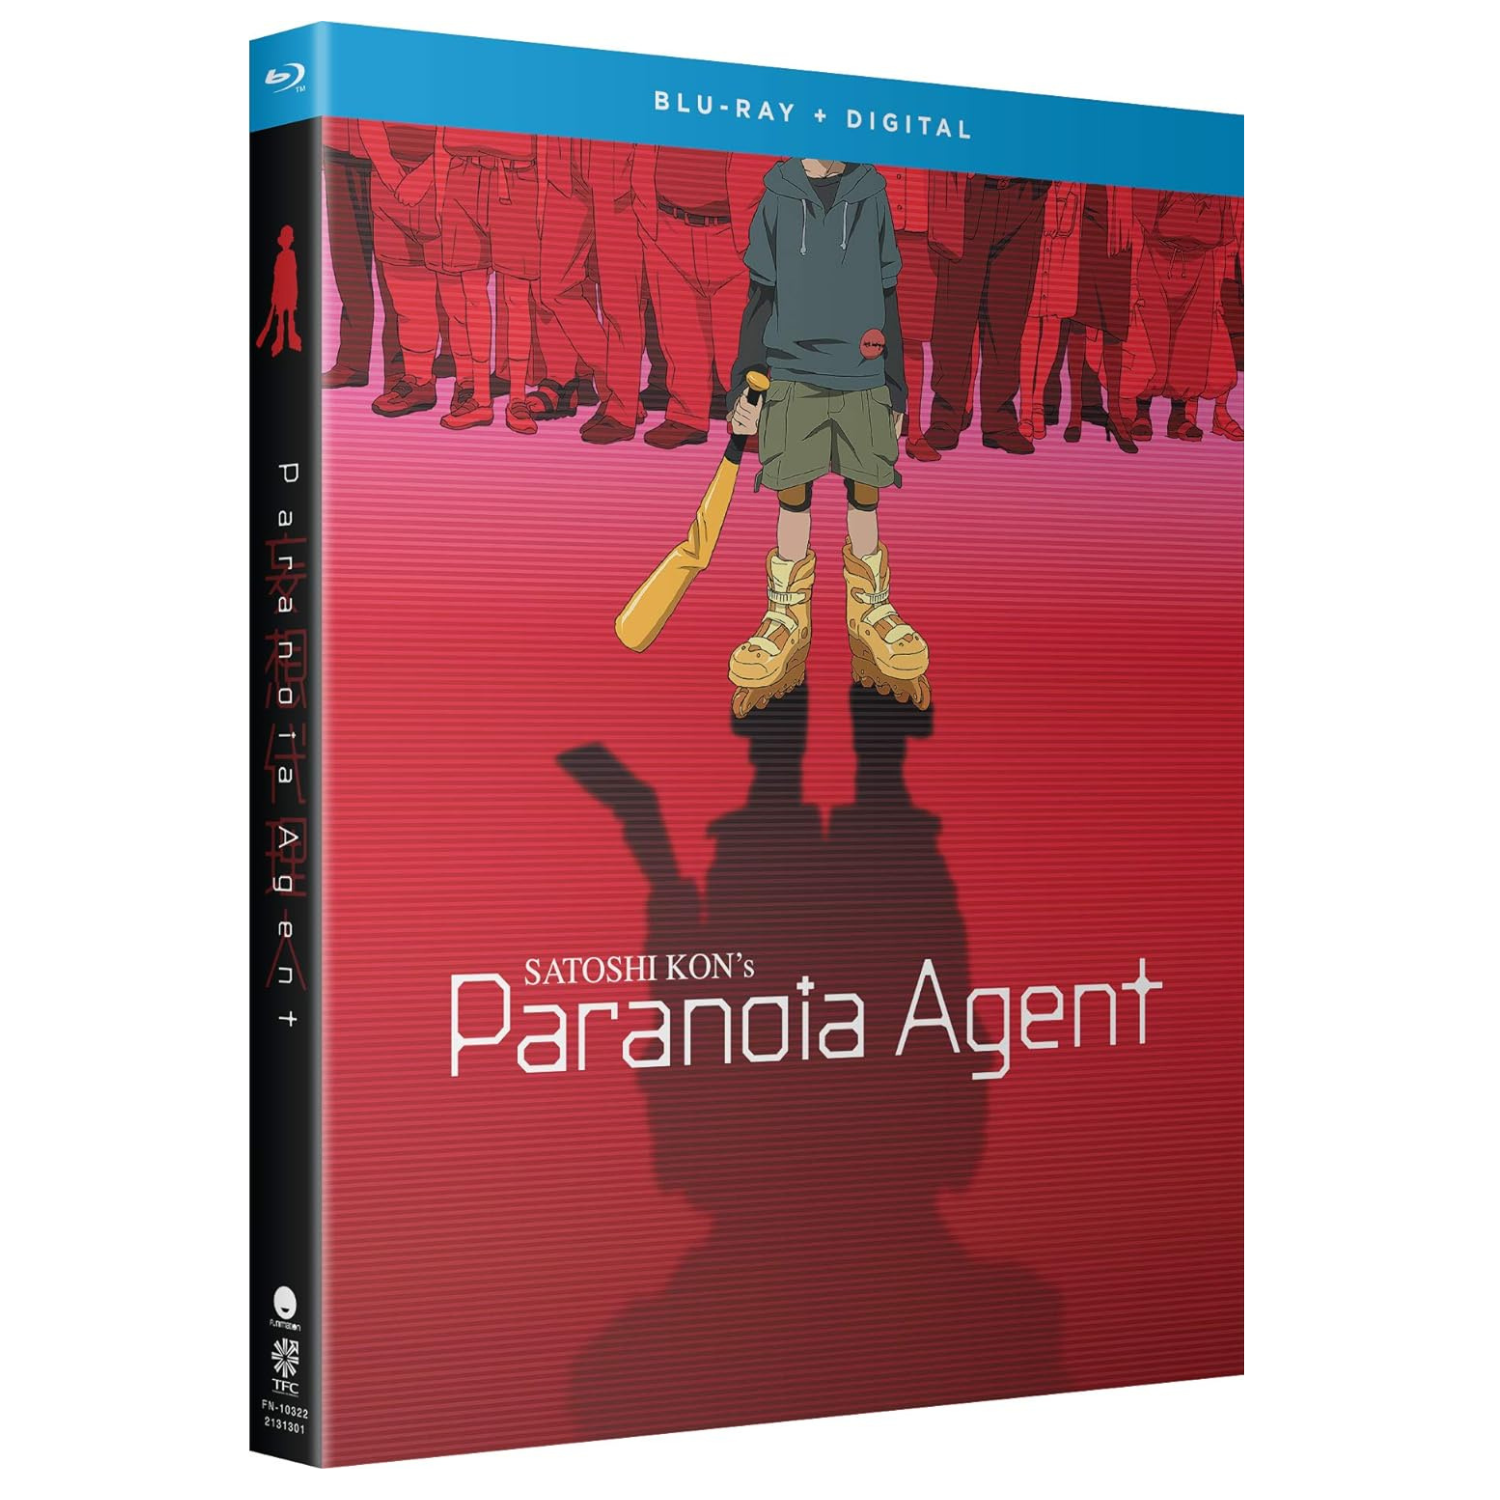 Paranoia Agent on Blu-ray